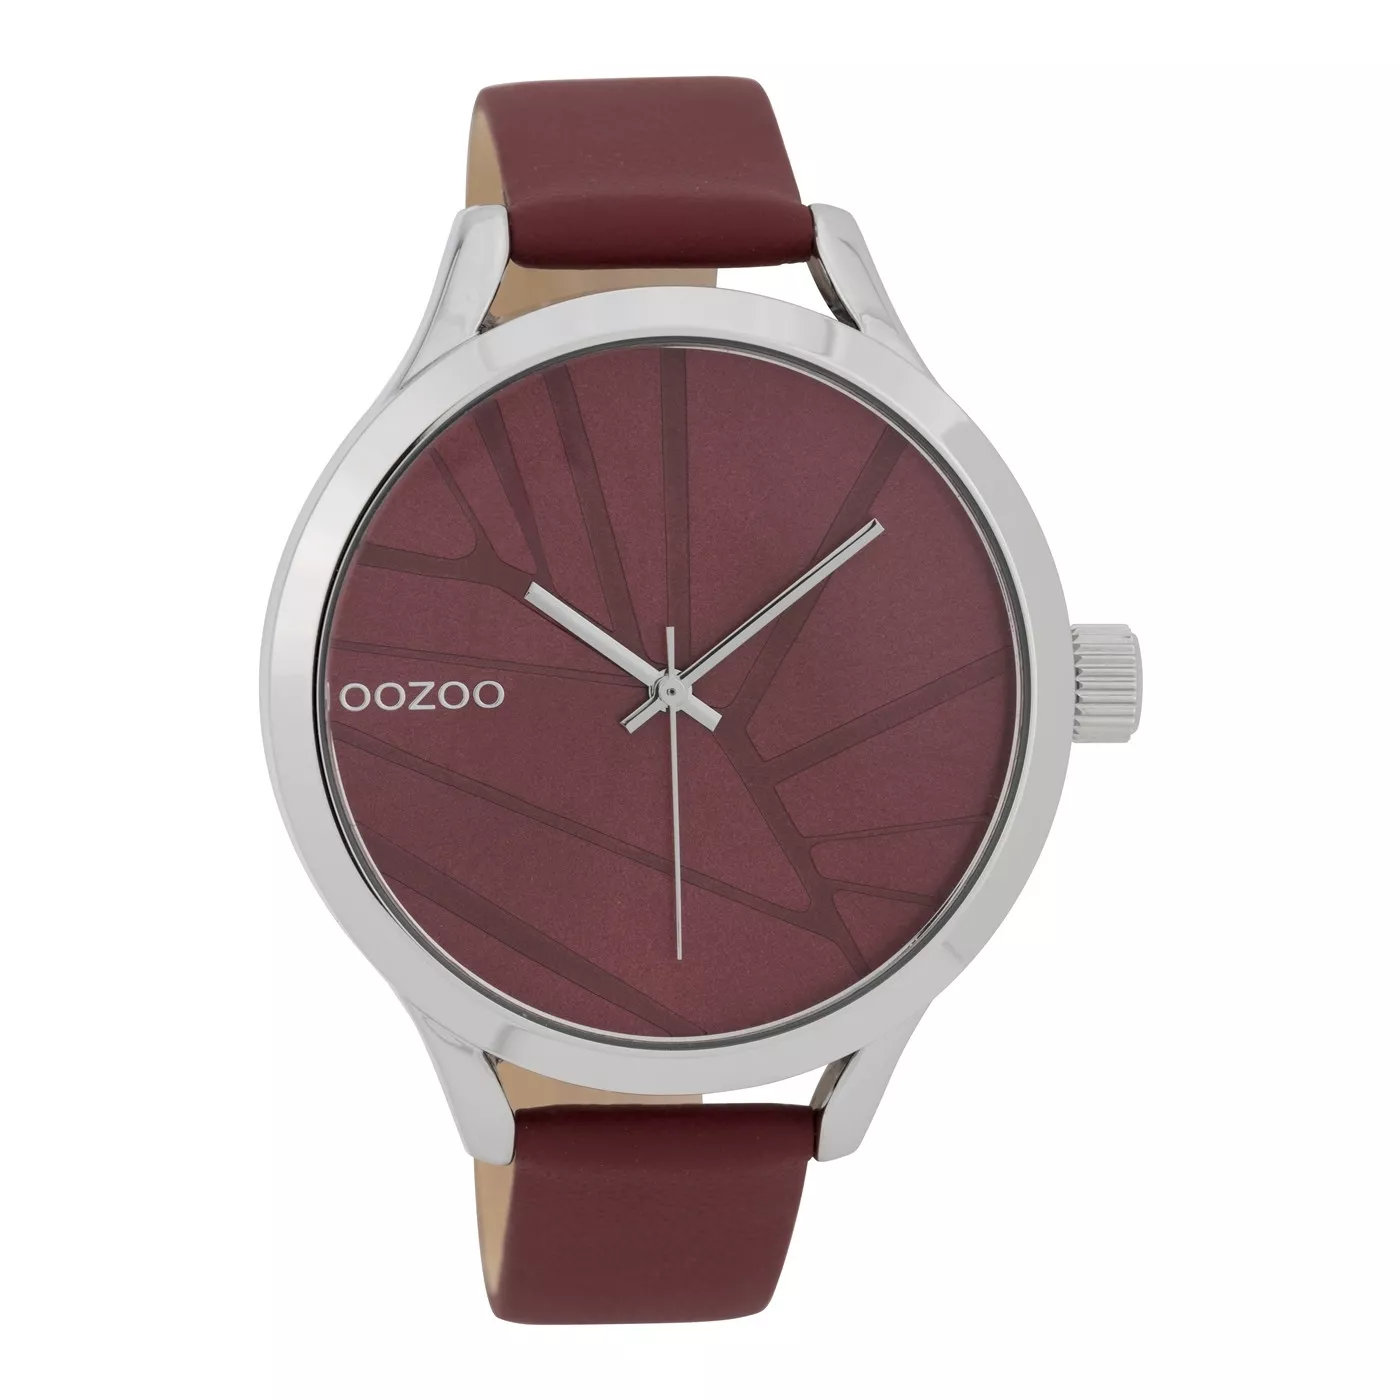 OOZOO Horloge Timepieces Collection staal/leder zilverkleurig-donkerrood C9682